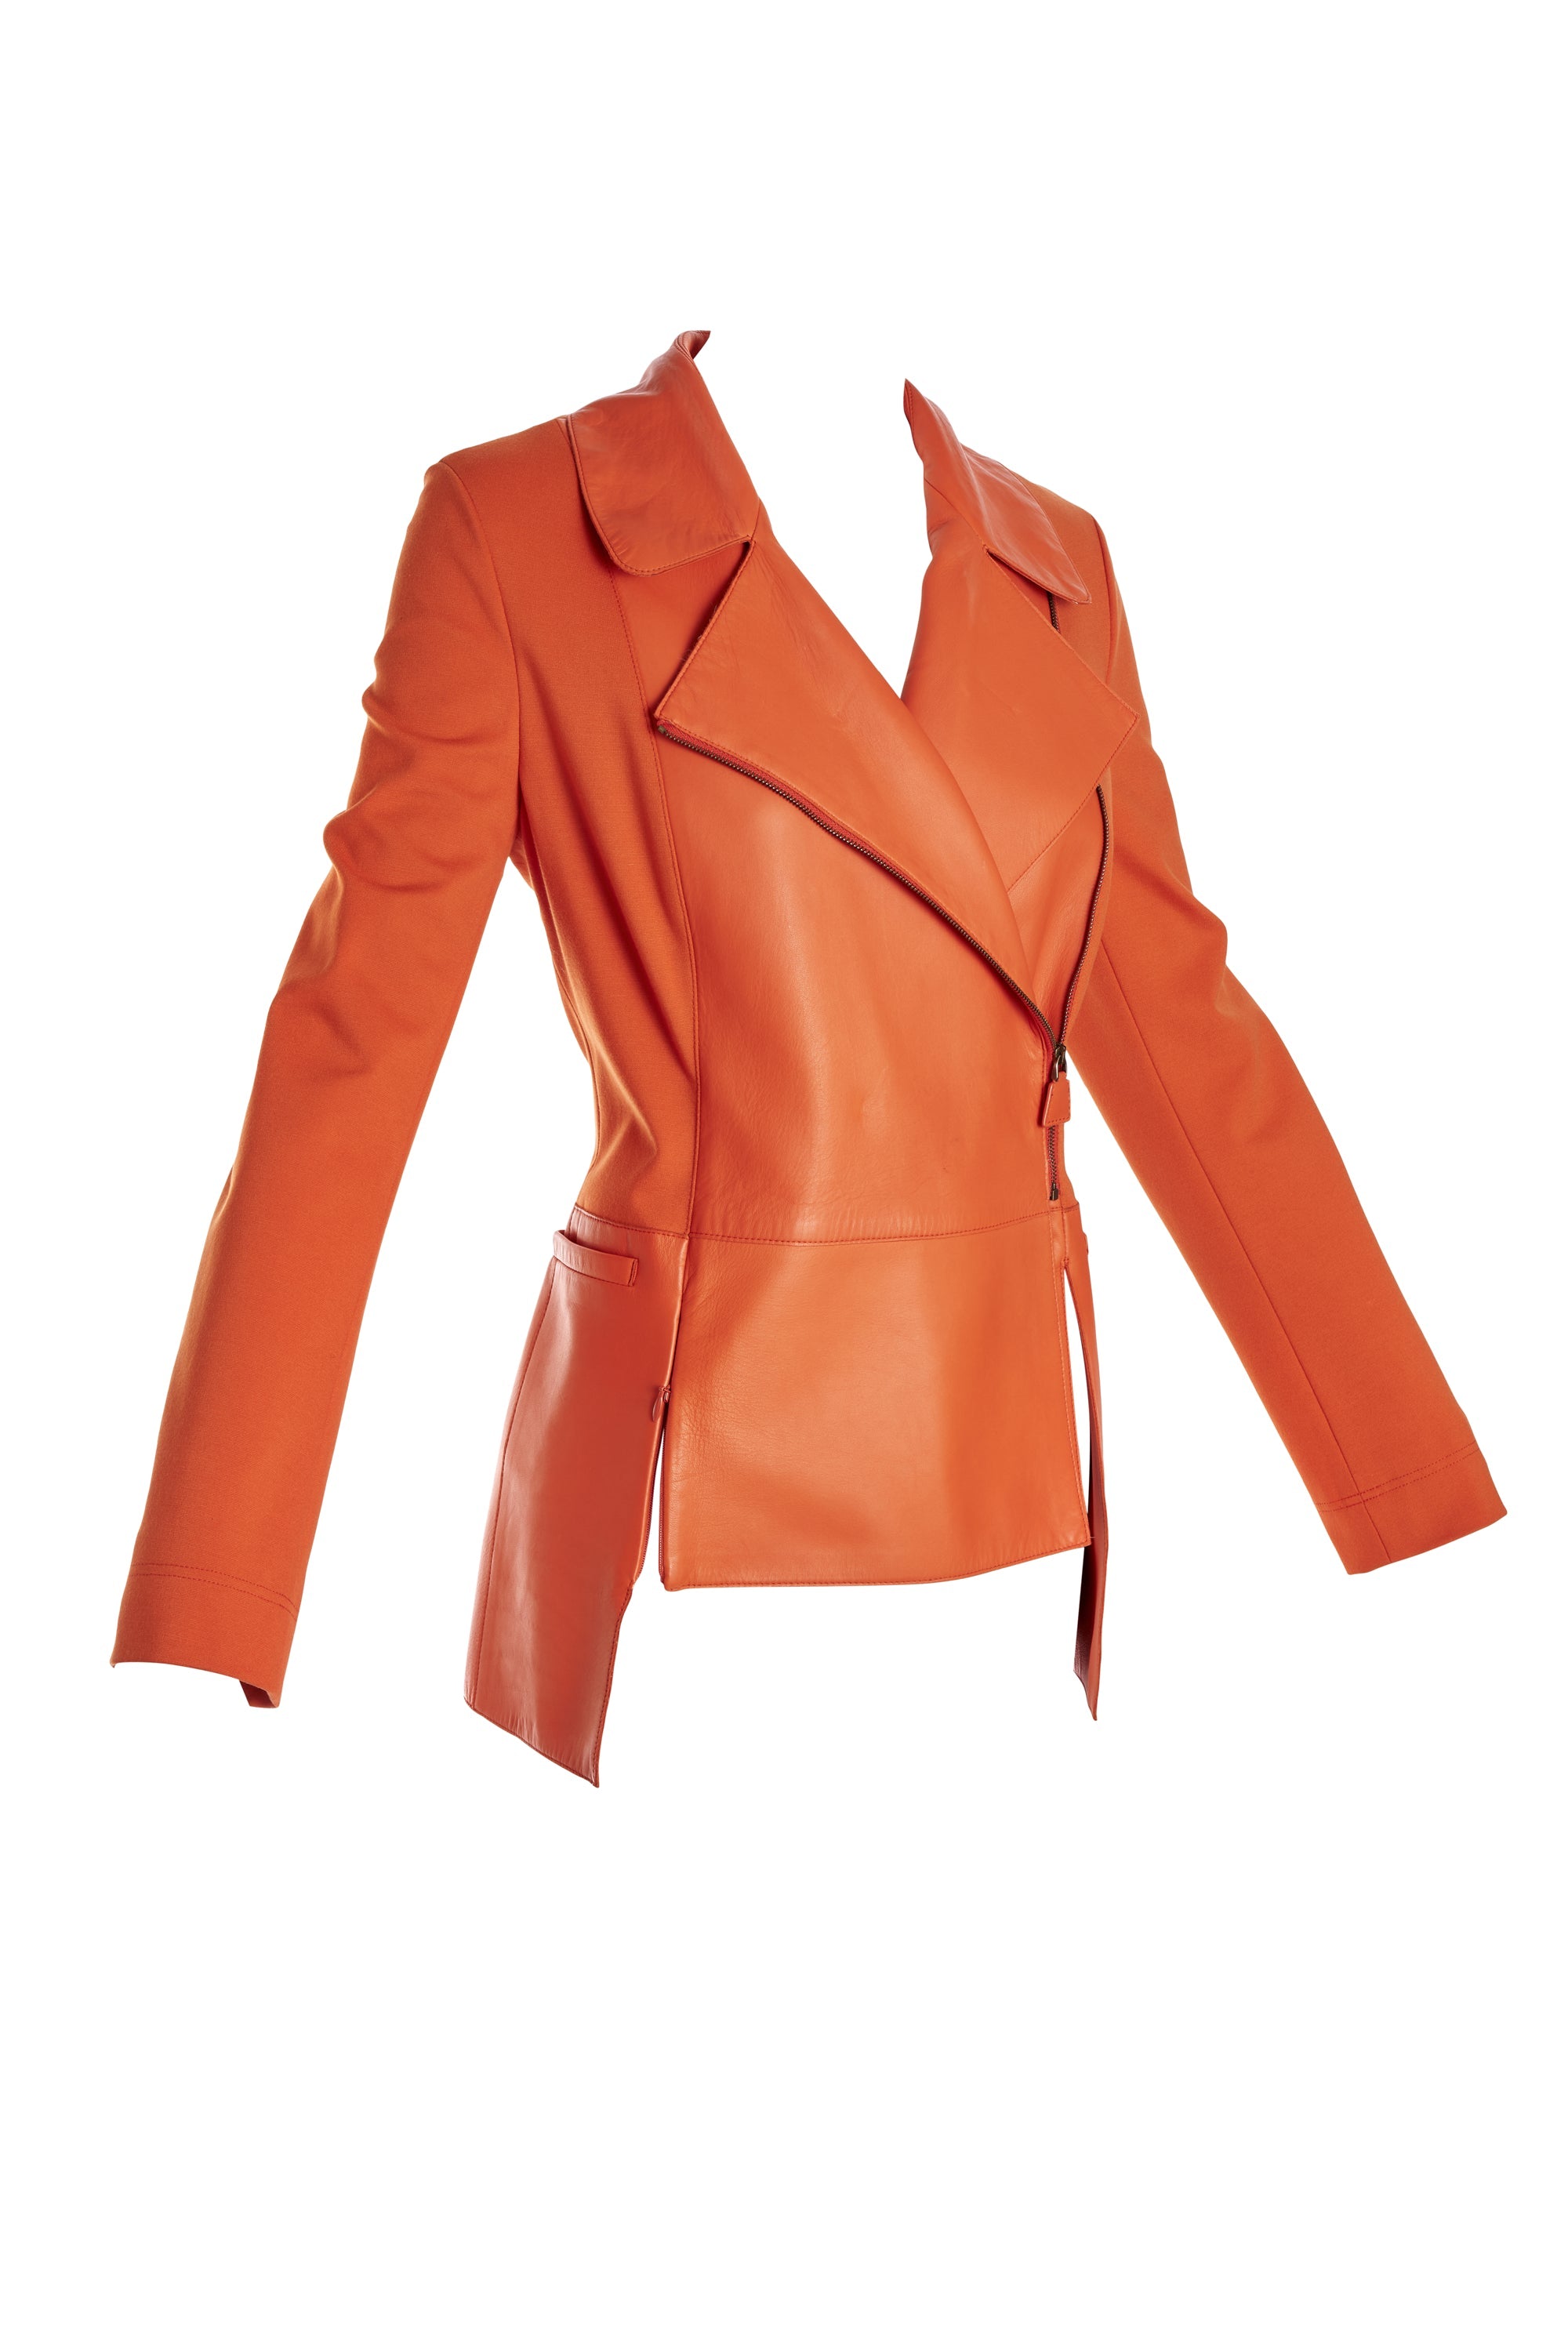 Akris Orange Knit + Leather Jacket